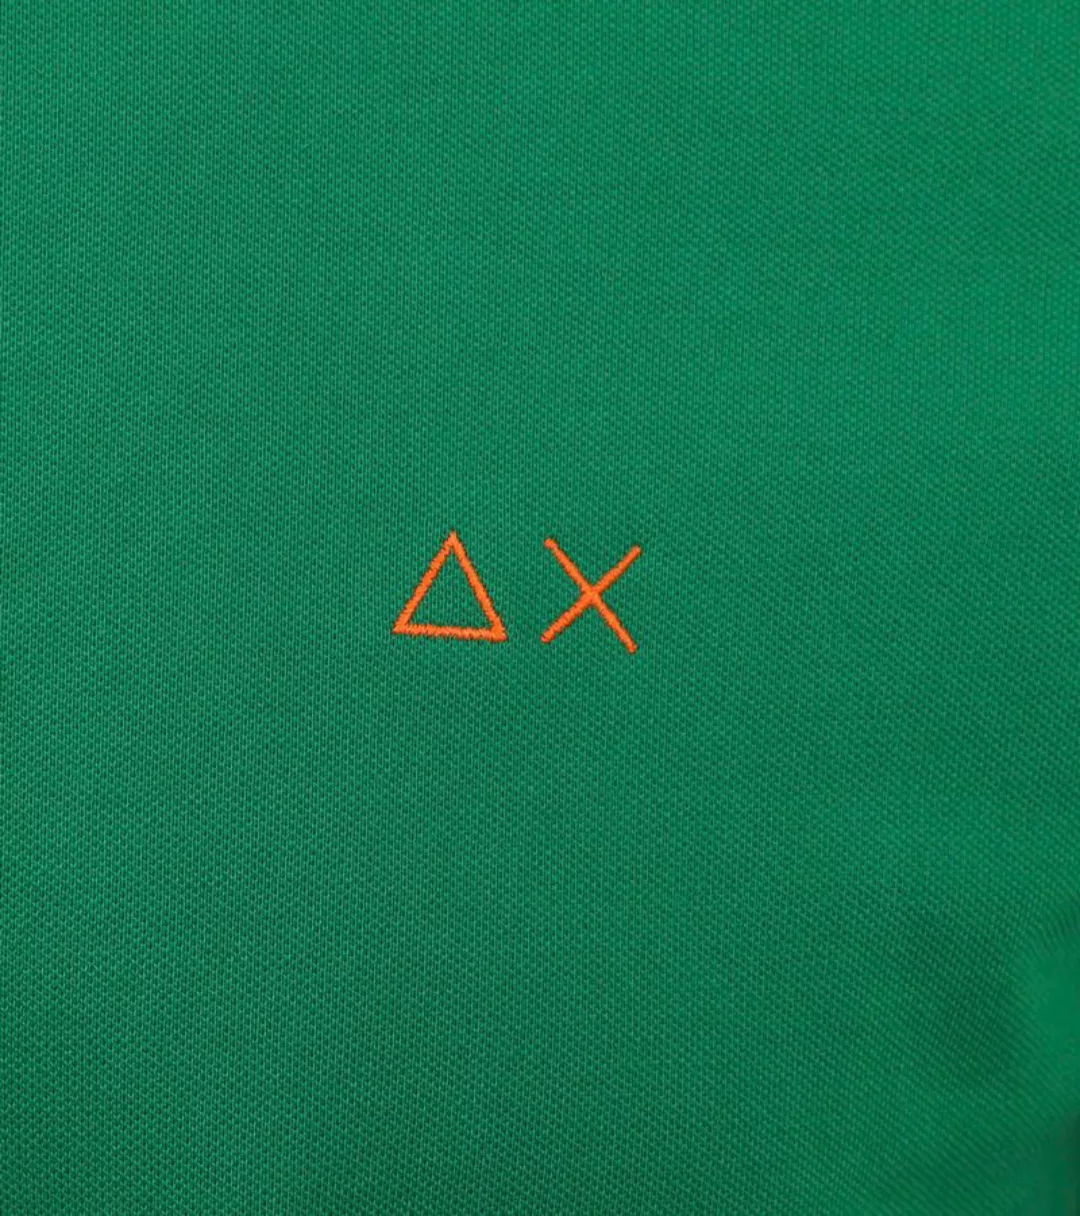 Sun68 Poloshirt Small Stripe Grün - Größe XL günstig online kaufen